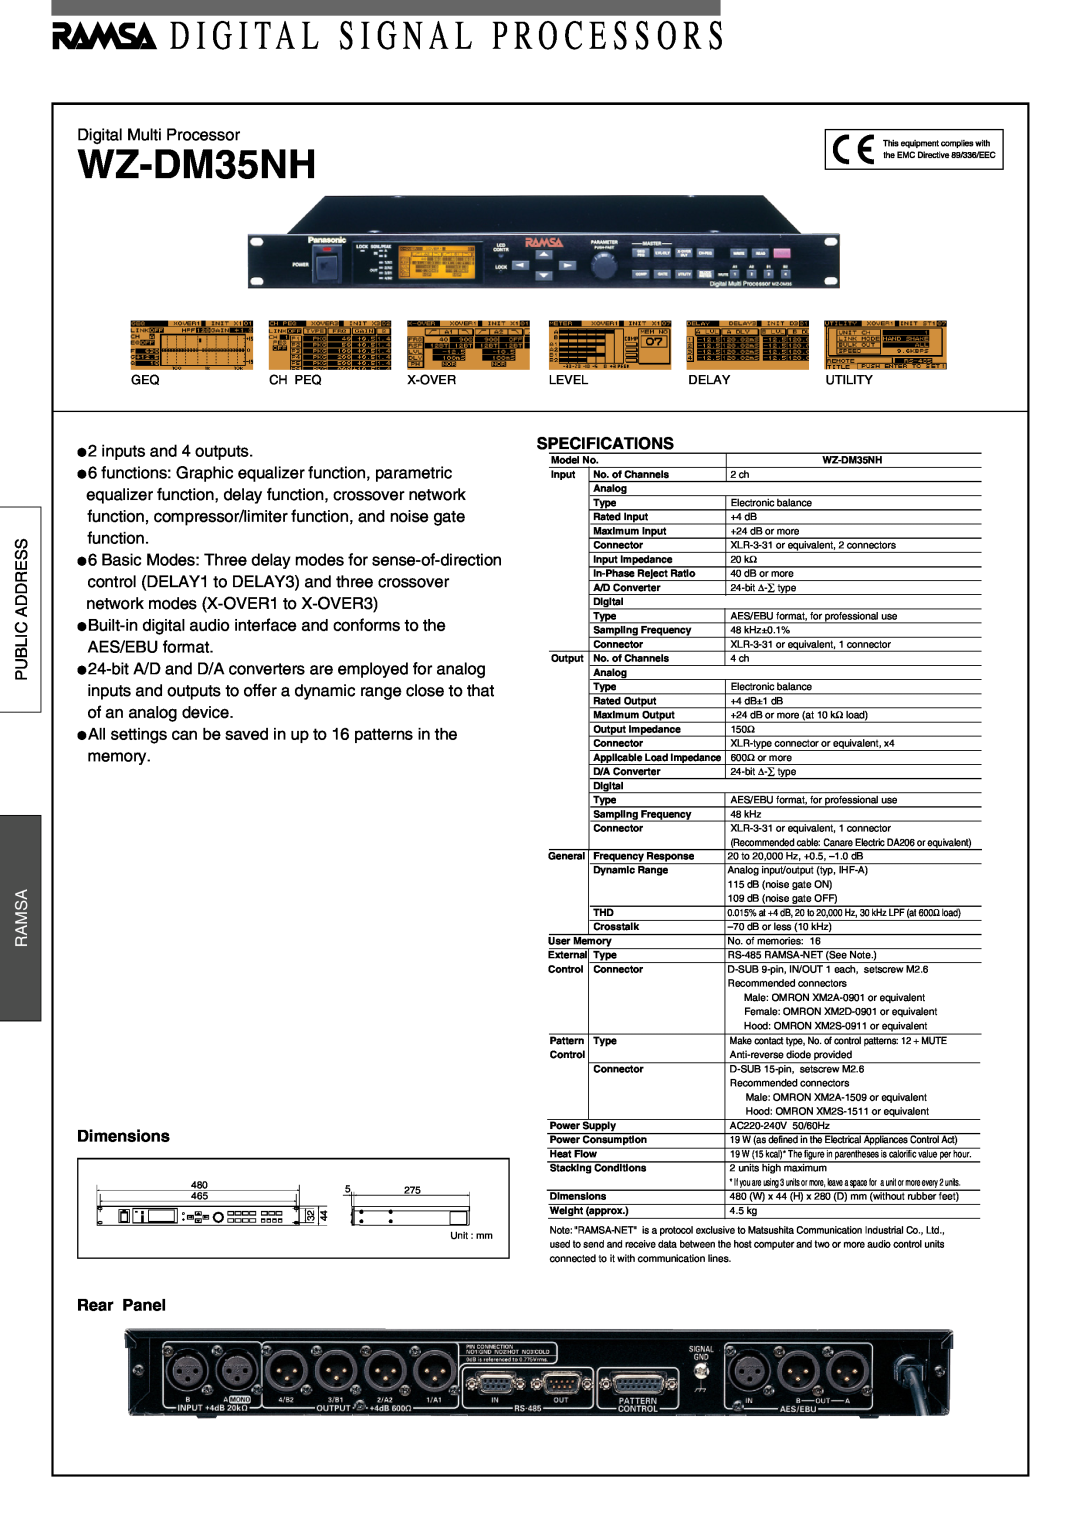 Panasonic WZ-DM35NH dimensions D I G I Ta L S I G N A L P R O C E S S O R S, Ramsa, Dimensions, Specifications, Rear Panel 